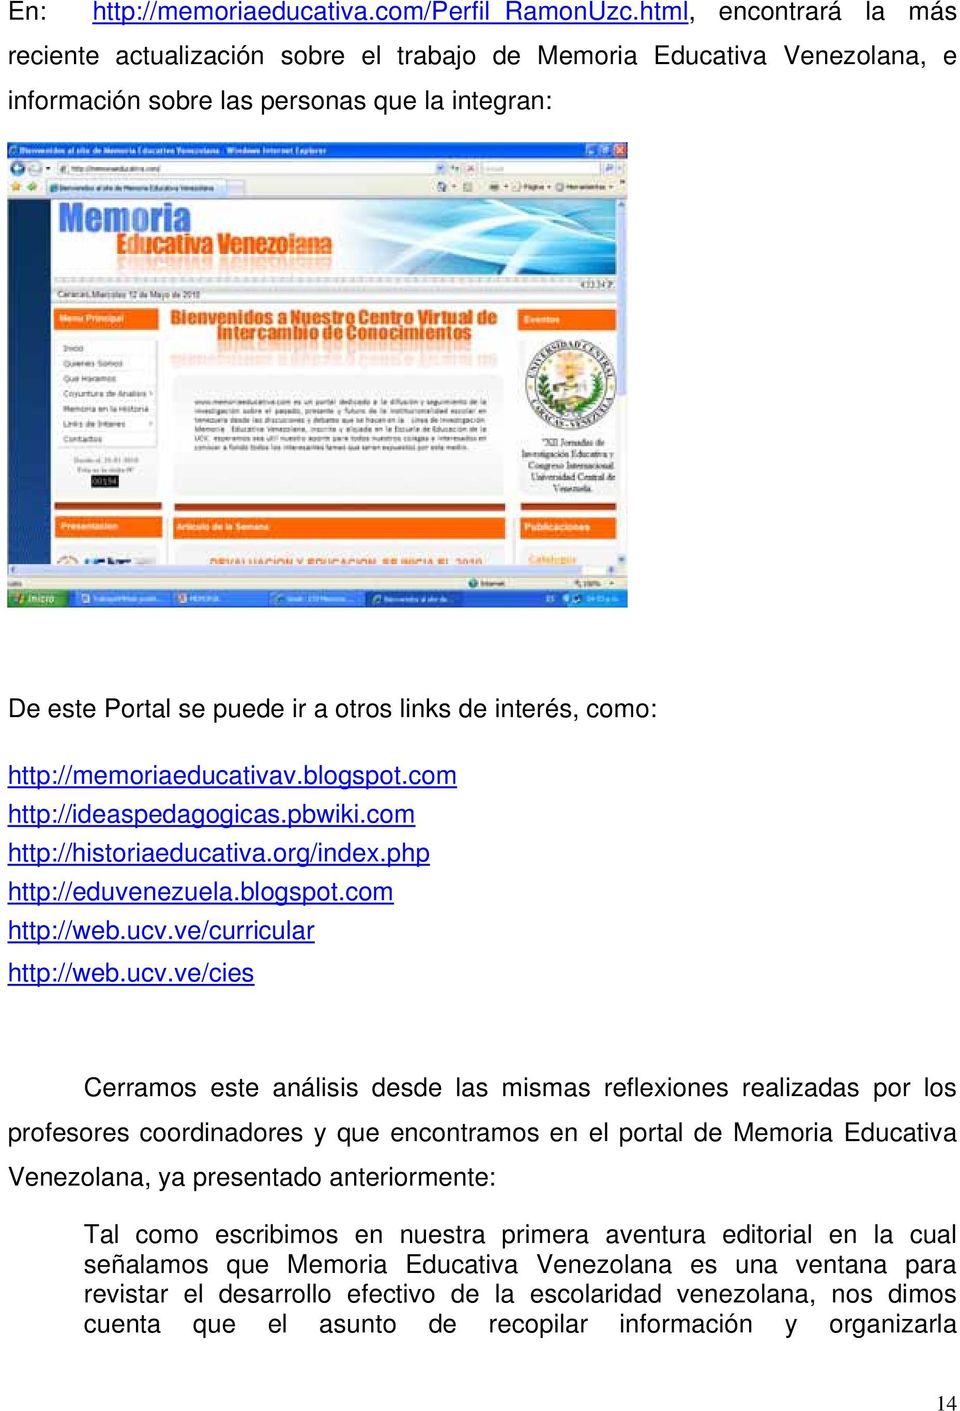 como: http://memoriaeducativav.blogspot.com http://ideaspedagogicas.pbwiki.com http://historiaeducativa.org/index.php http://eduvenezuela.blogspot.com http://web.ucv.